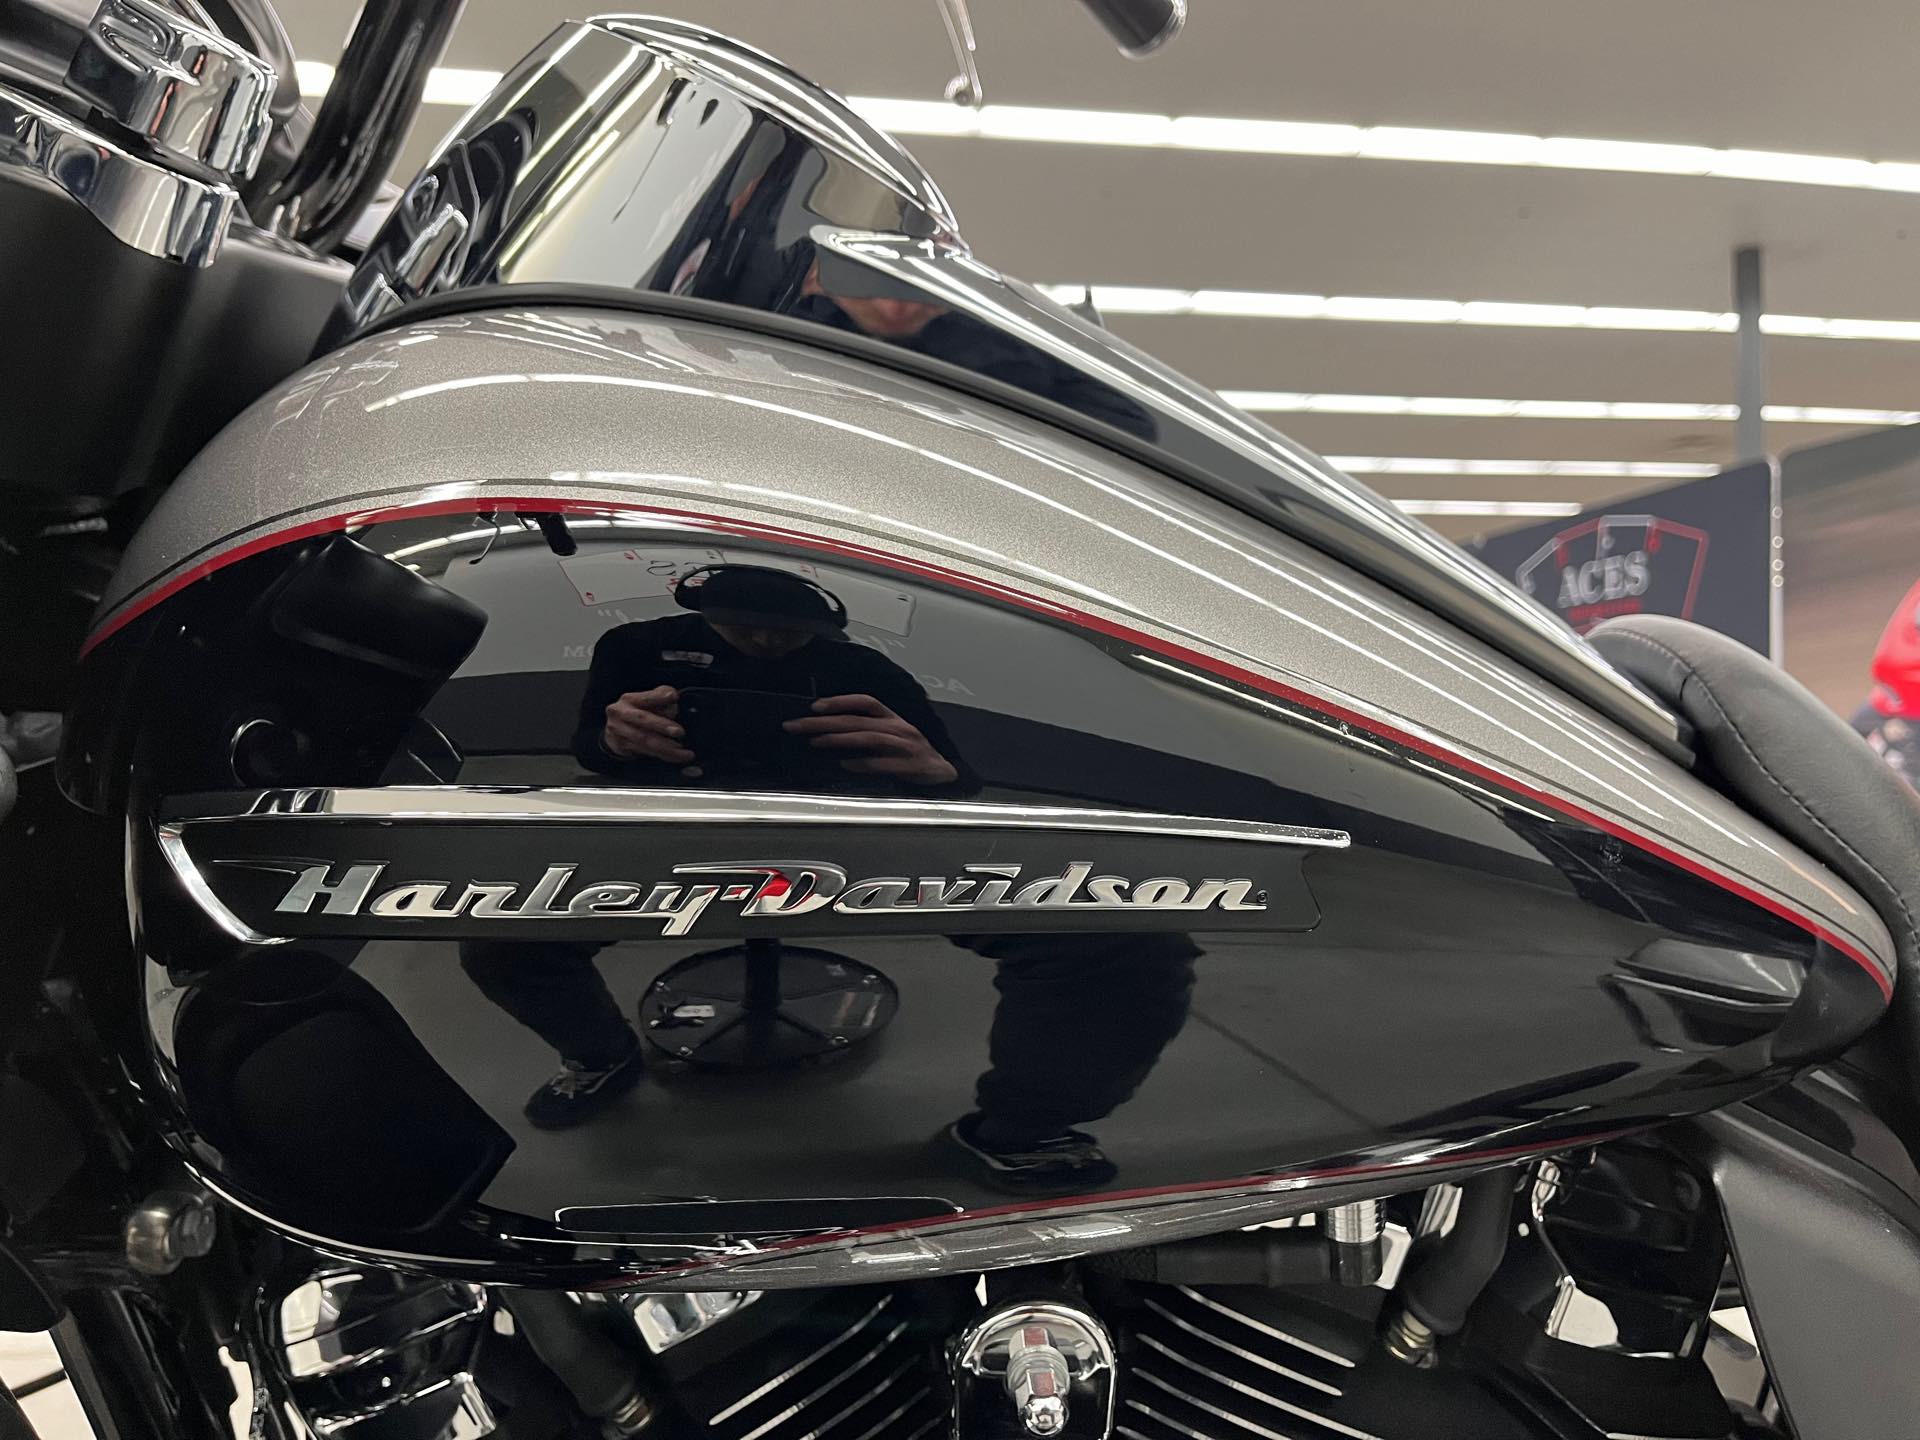 2017 Harley-Davidson Road Glide Ultra at Aces Motorcycles - Denver